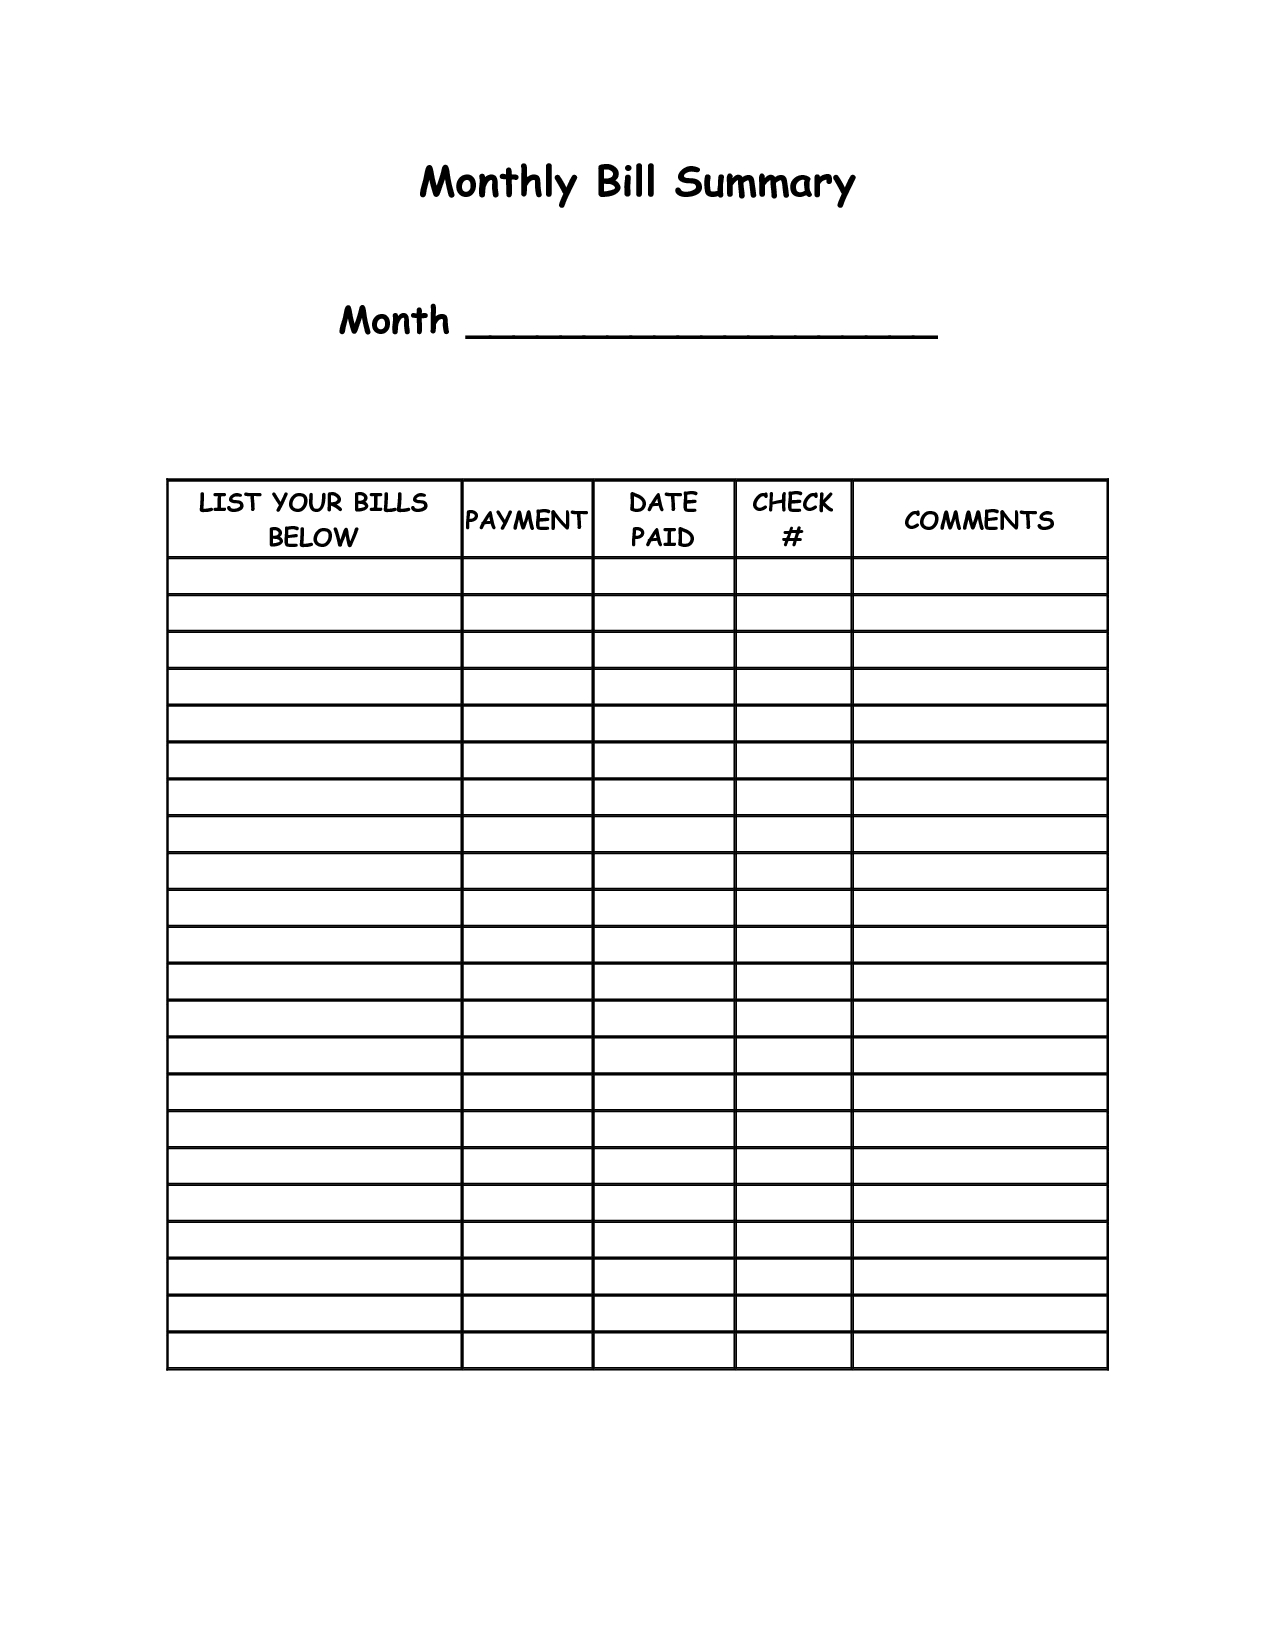 Monthly Bill Summary Doc | Organization | Organizing Monthly Bills within Monthly Bill Template Free Printable